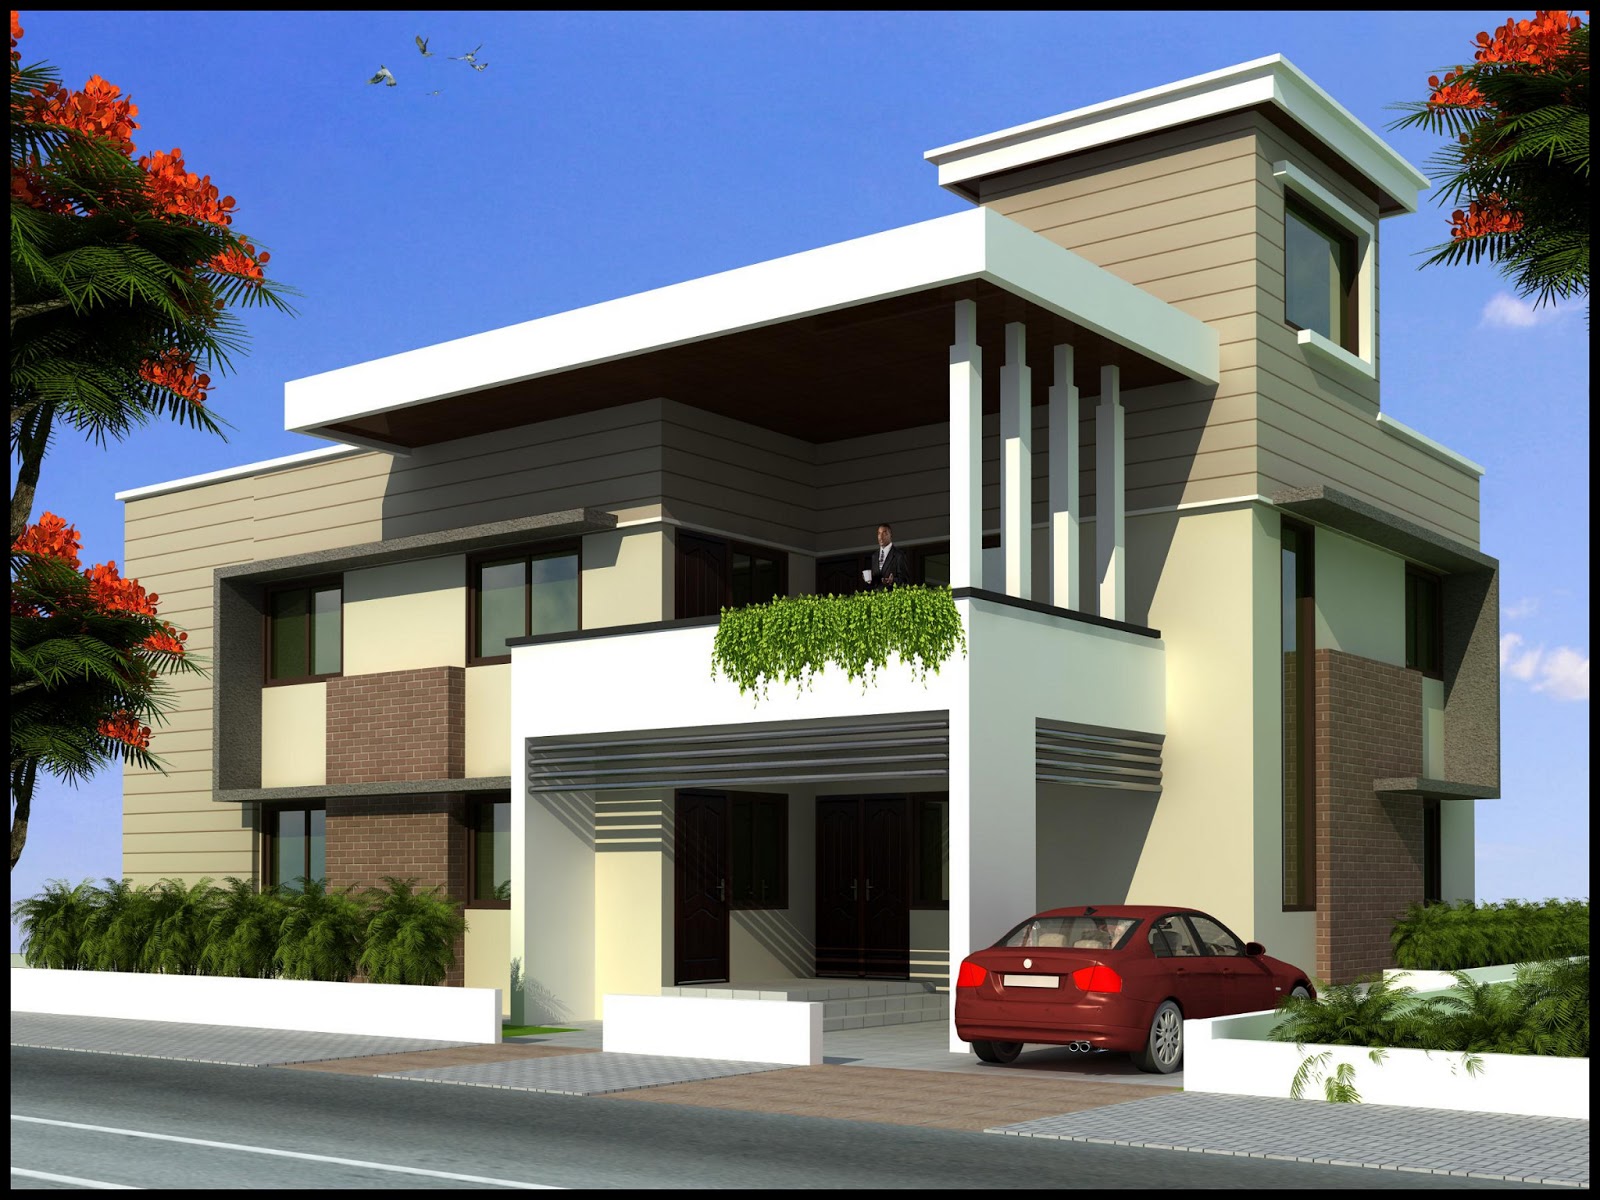 5 Bedrooms Duplex House Design in 357m2 (21m X 17m) ~ Complete ...